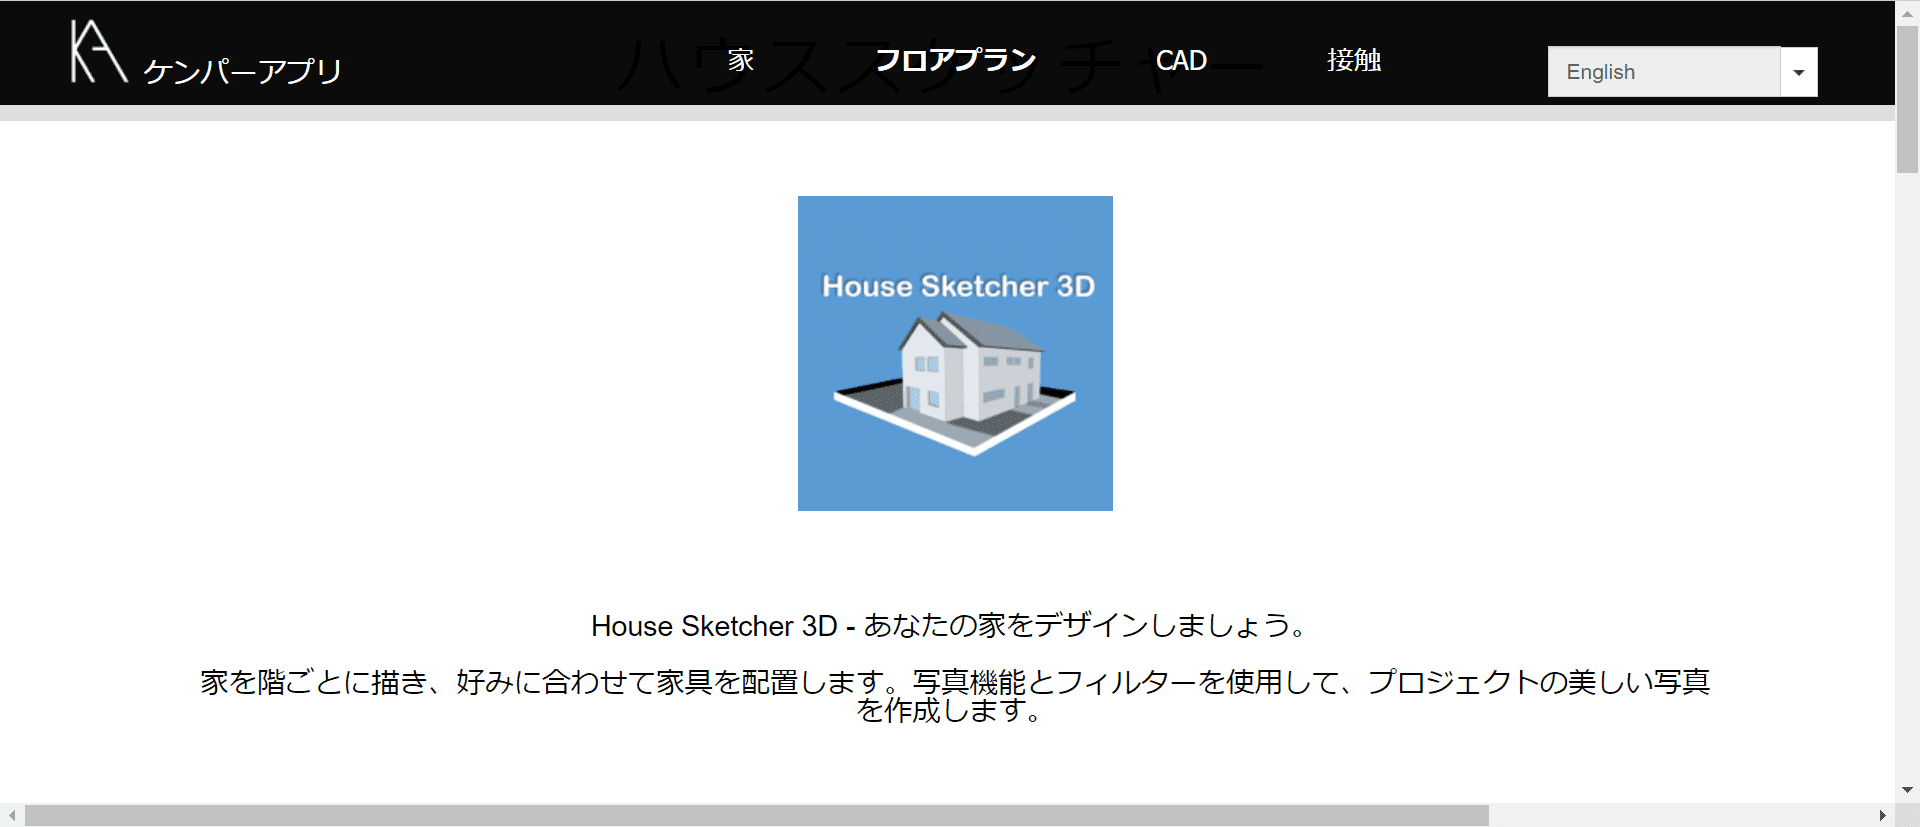 House Sketcher 3D